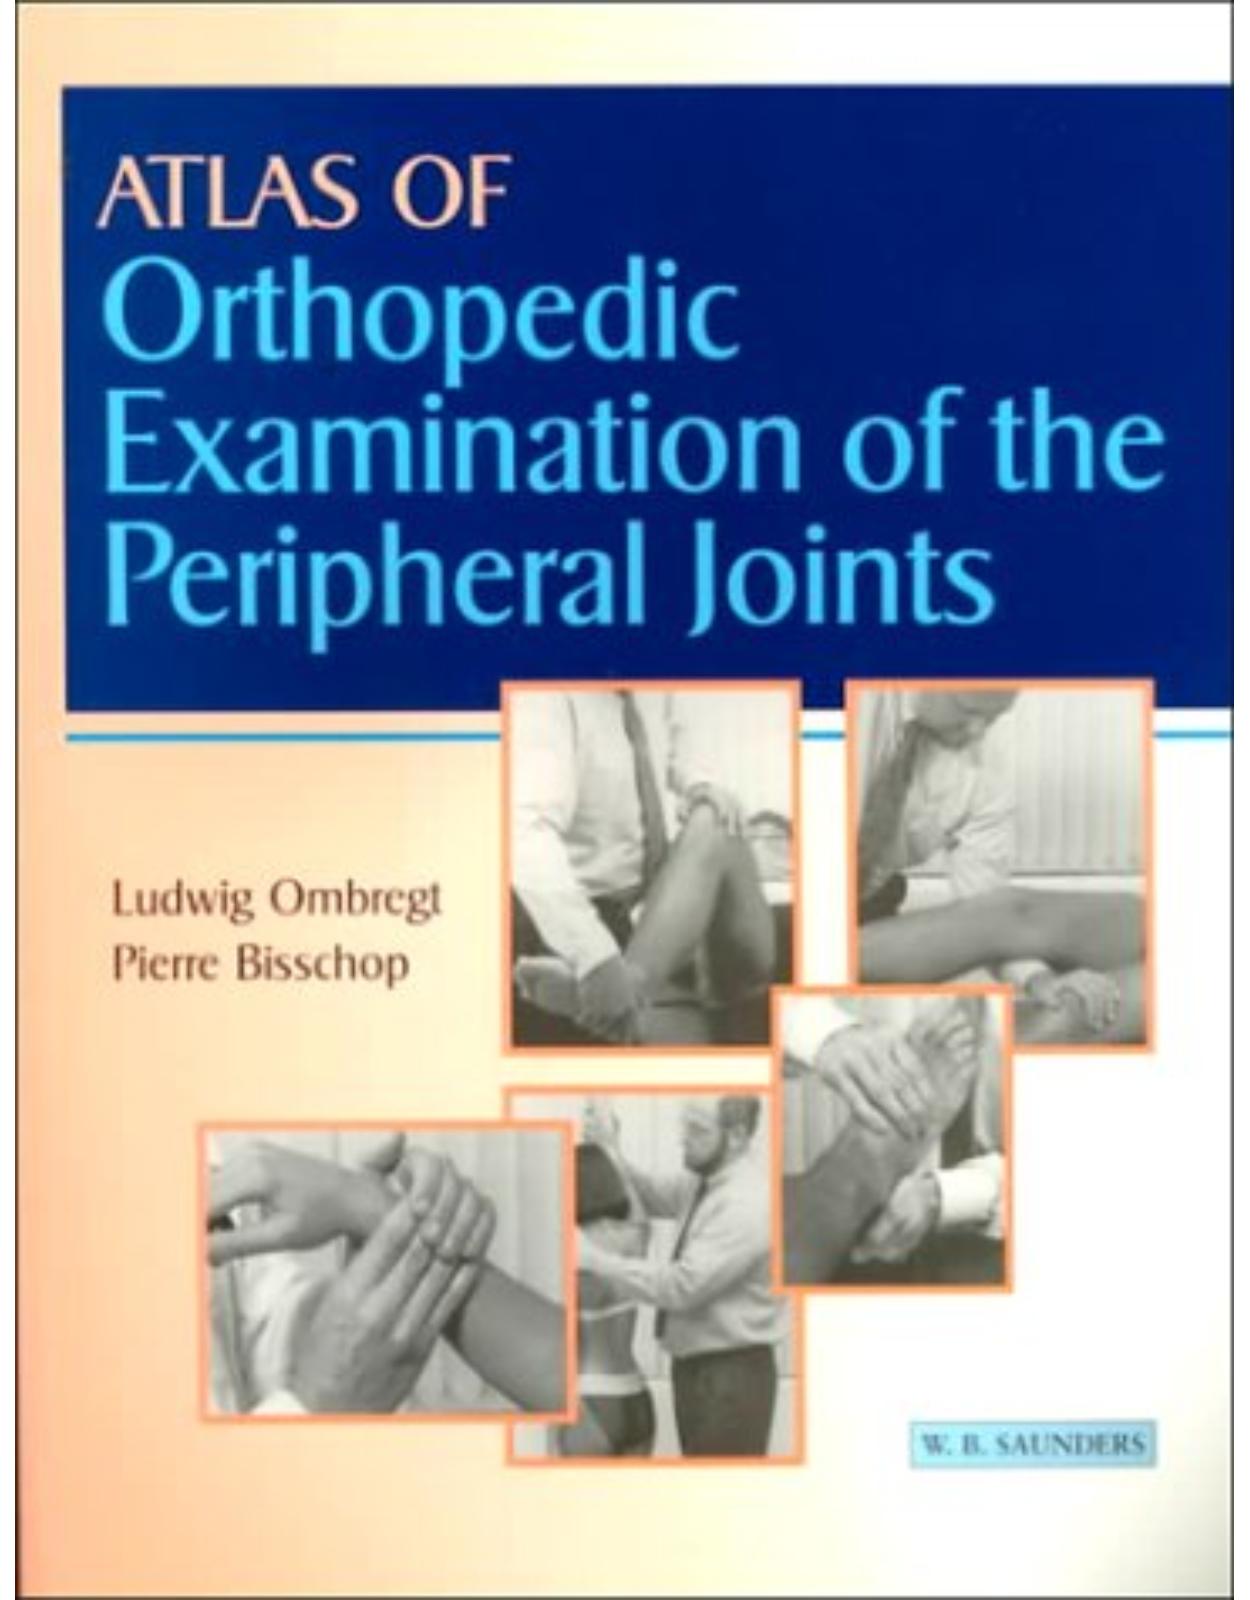 Atlas of Orthopaedic Examination